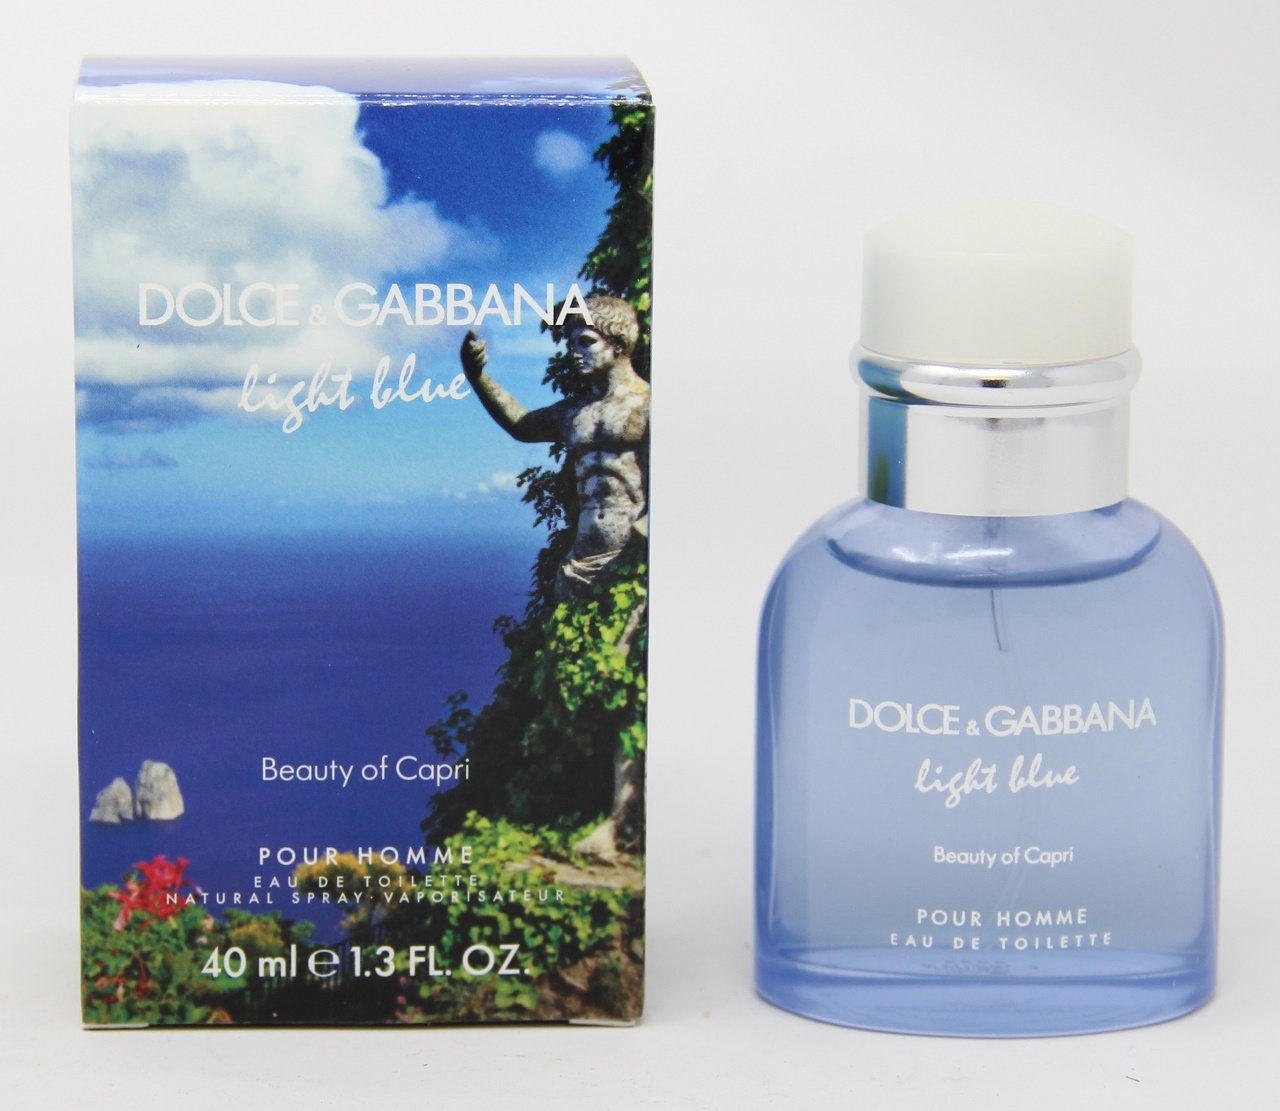 DOLCE & GABBANA Eau de Toilette Dolce & Gabbana Light Blue Beauty of Capri Eau de Toilette vapo 40 ml